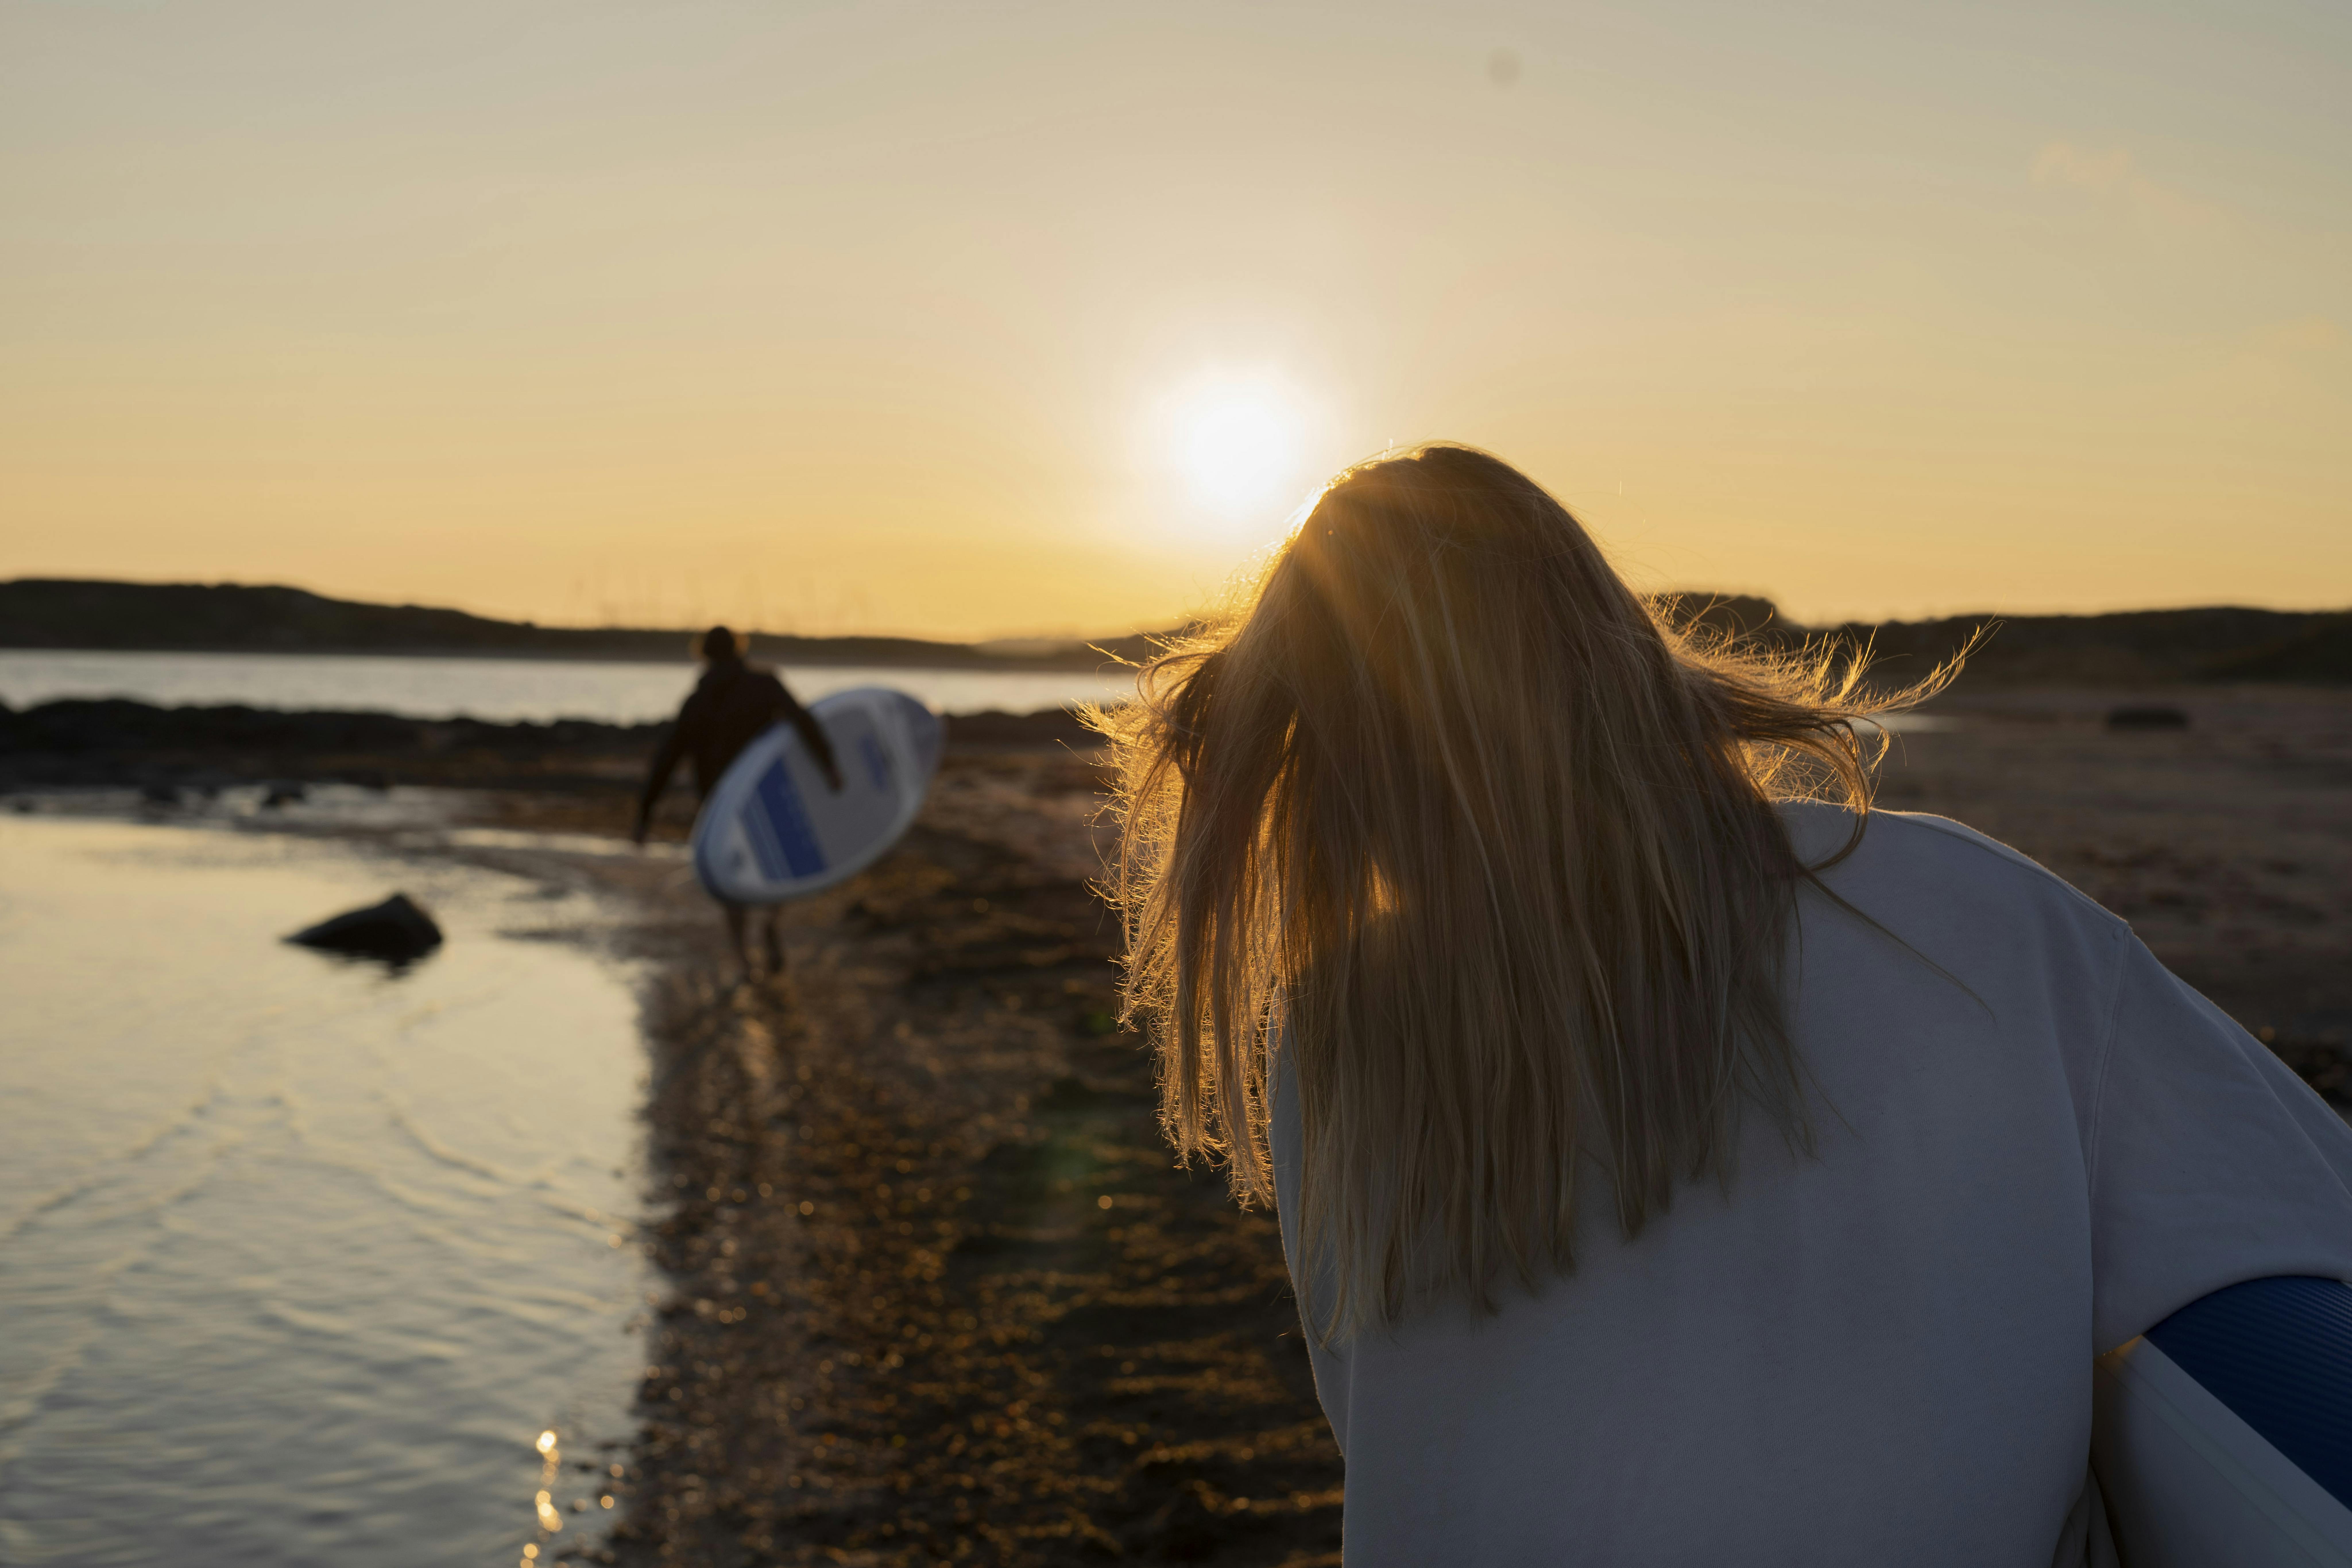 Mann und Frau tragen SUP Boards am Strand im Sonnenuntergang.